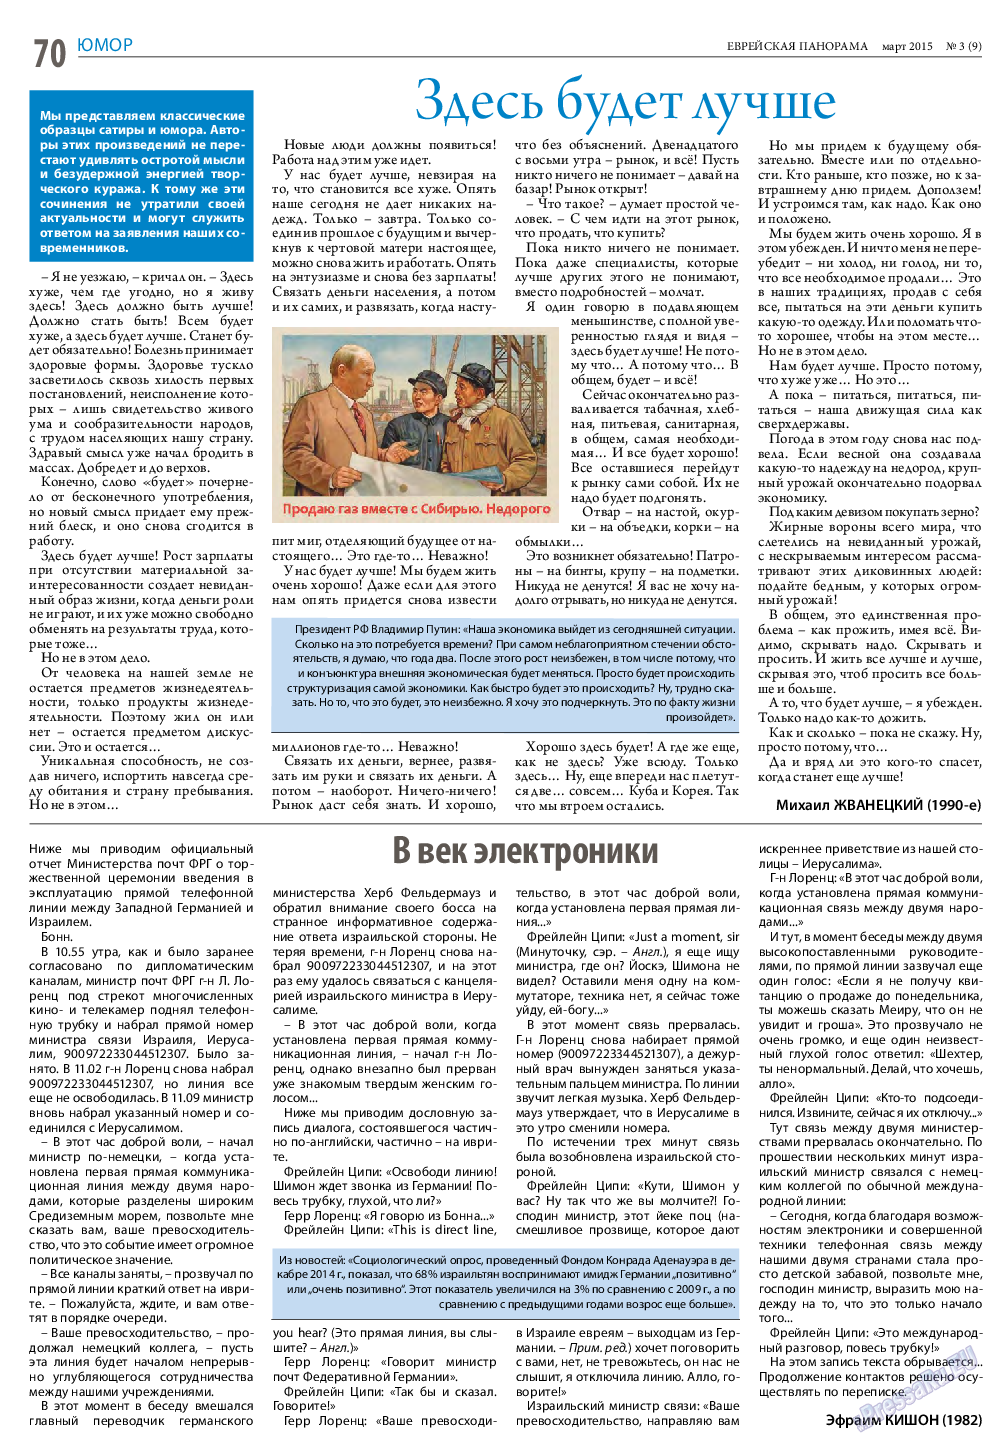 Еврейская панорама, газета. 2015 №3 стр.70